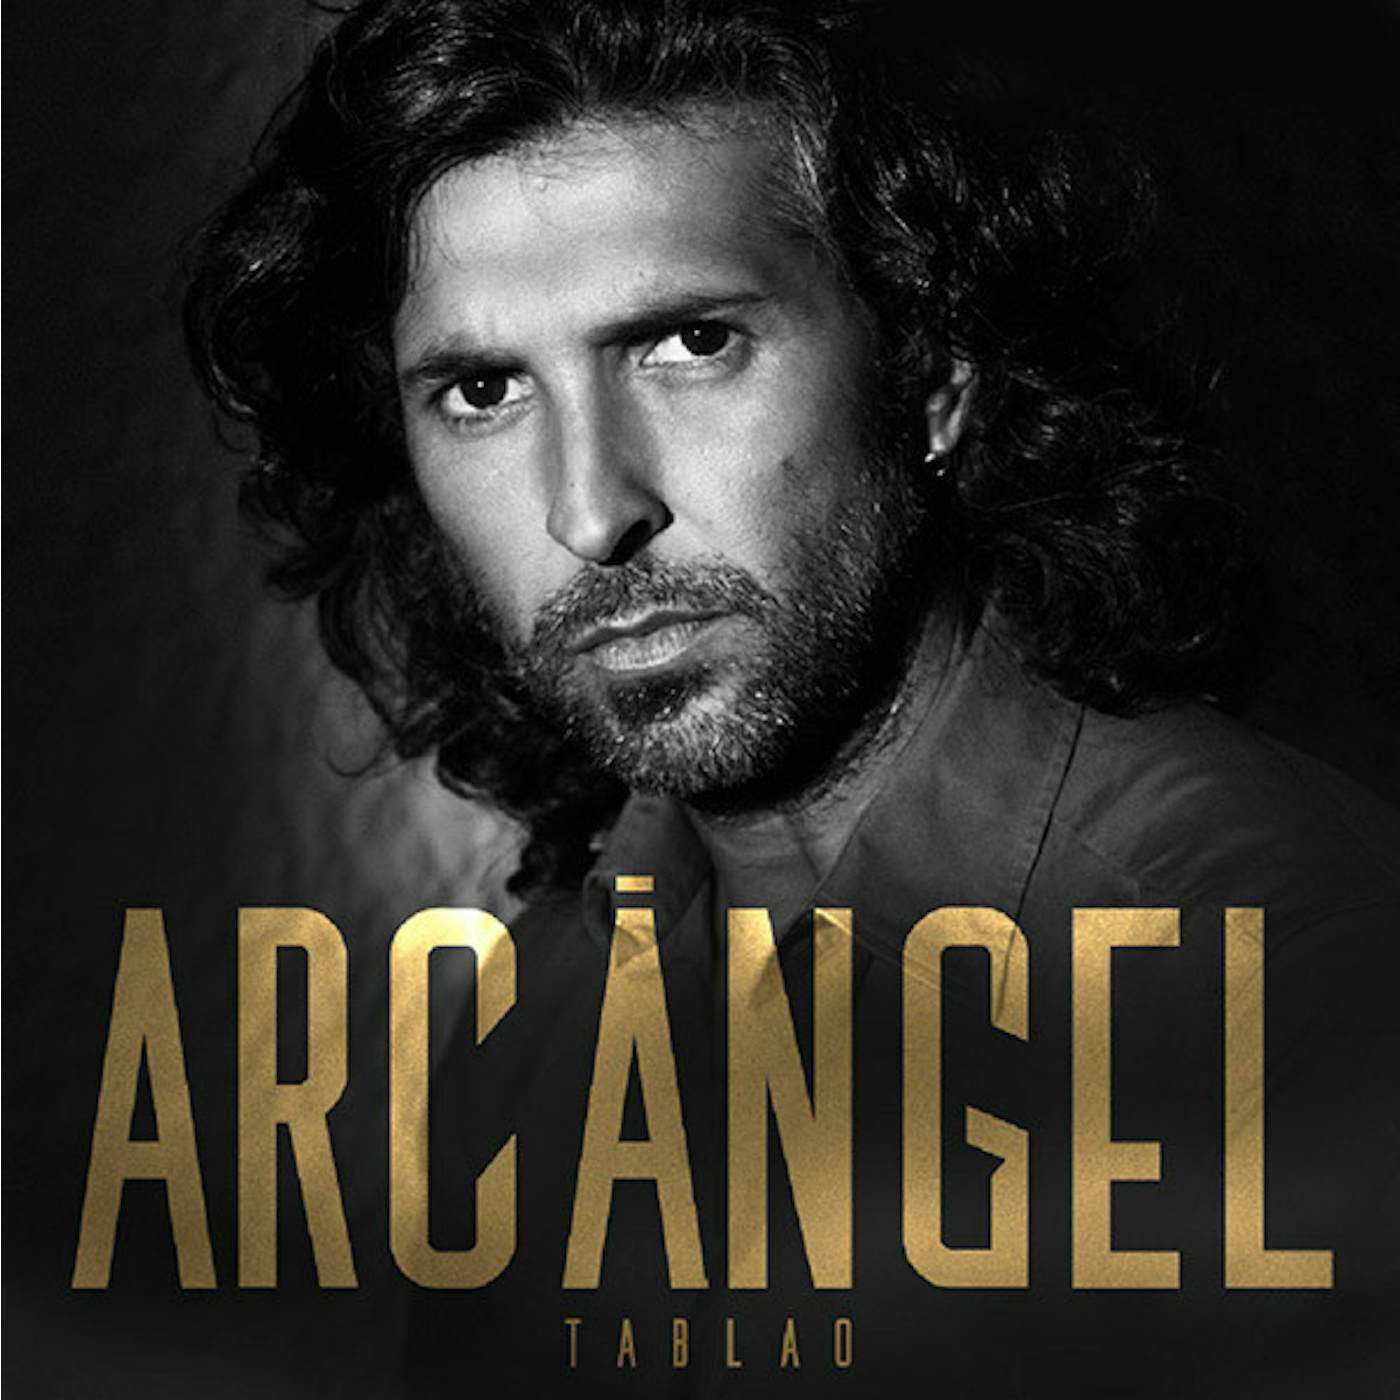 Arcangel TABLAO CD